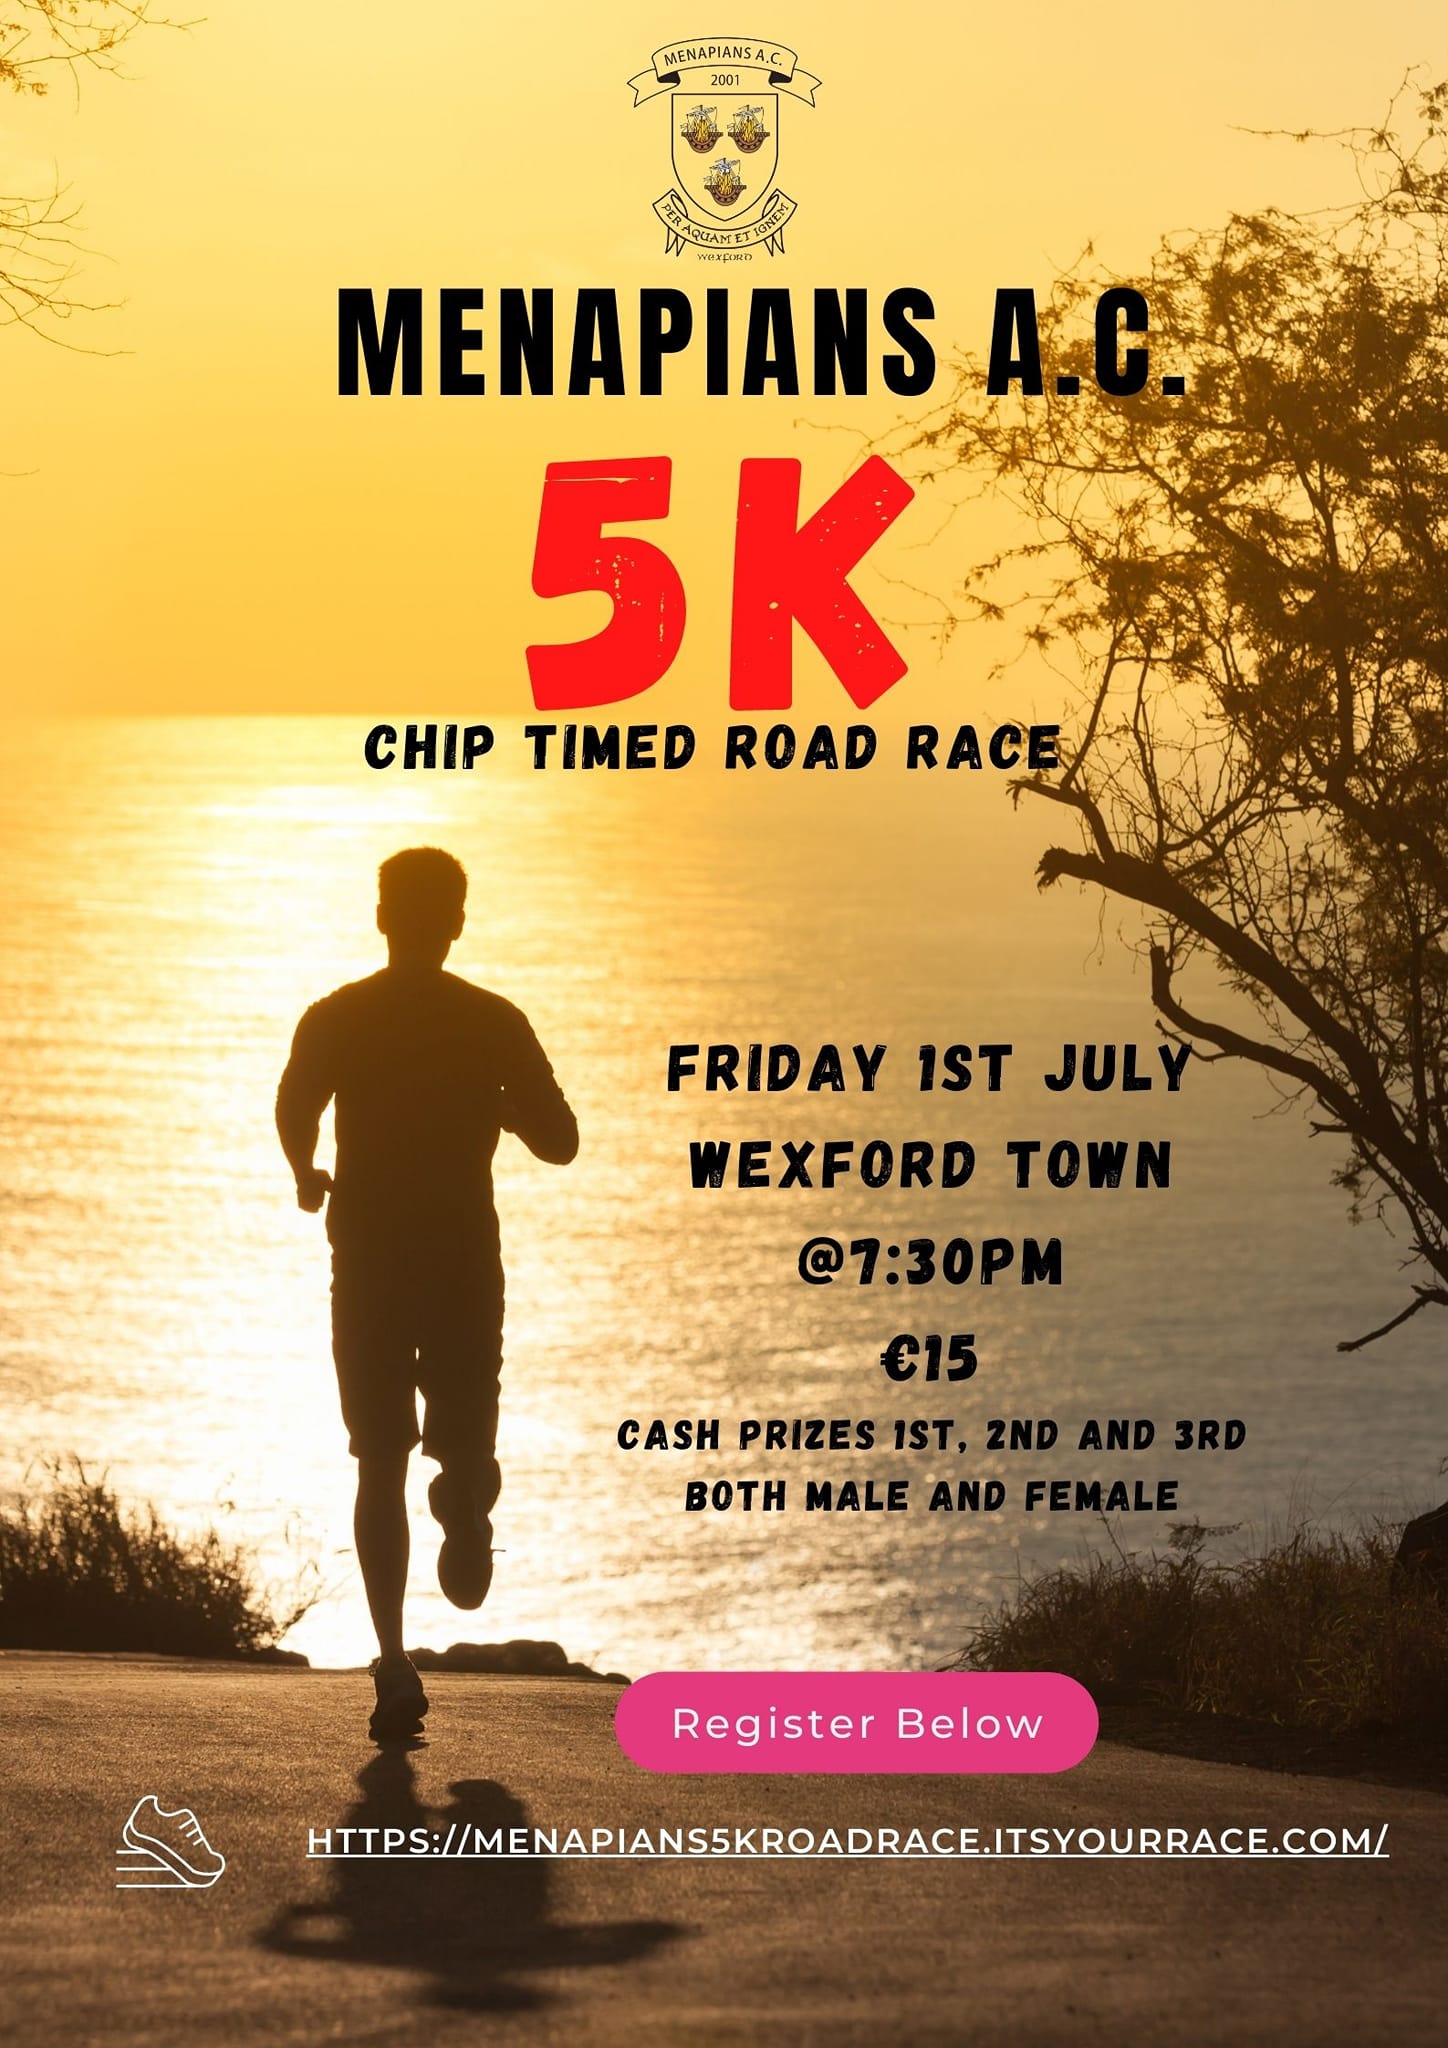 Menapians AC 5K Road Race in Wexford Town, IE Details, Registration